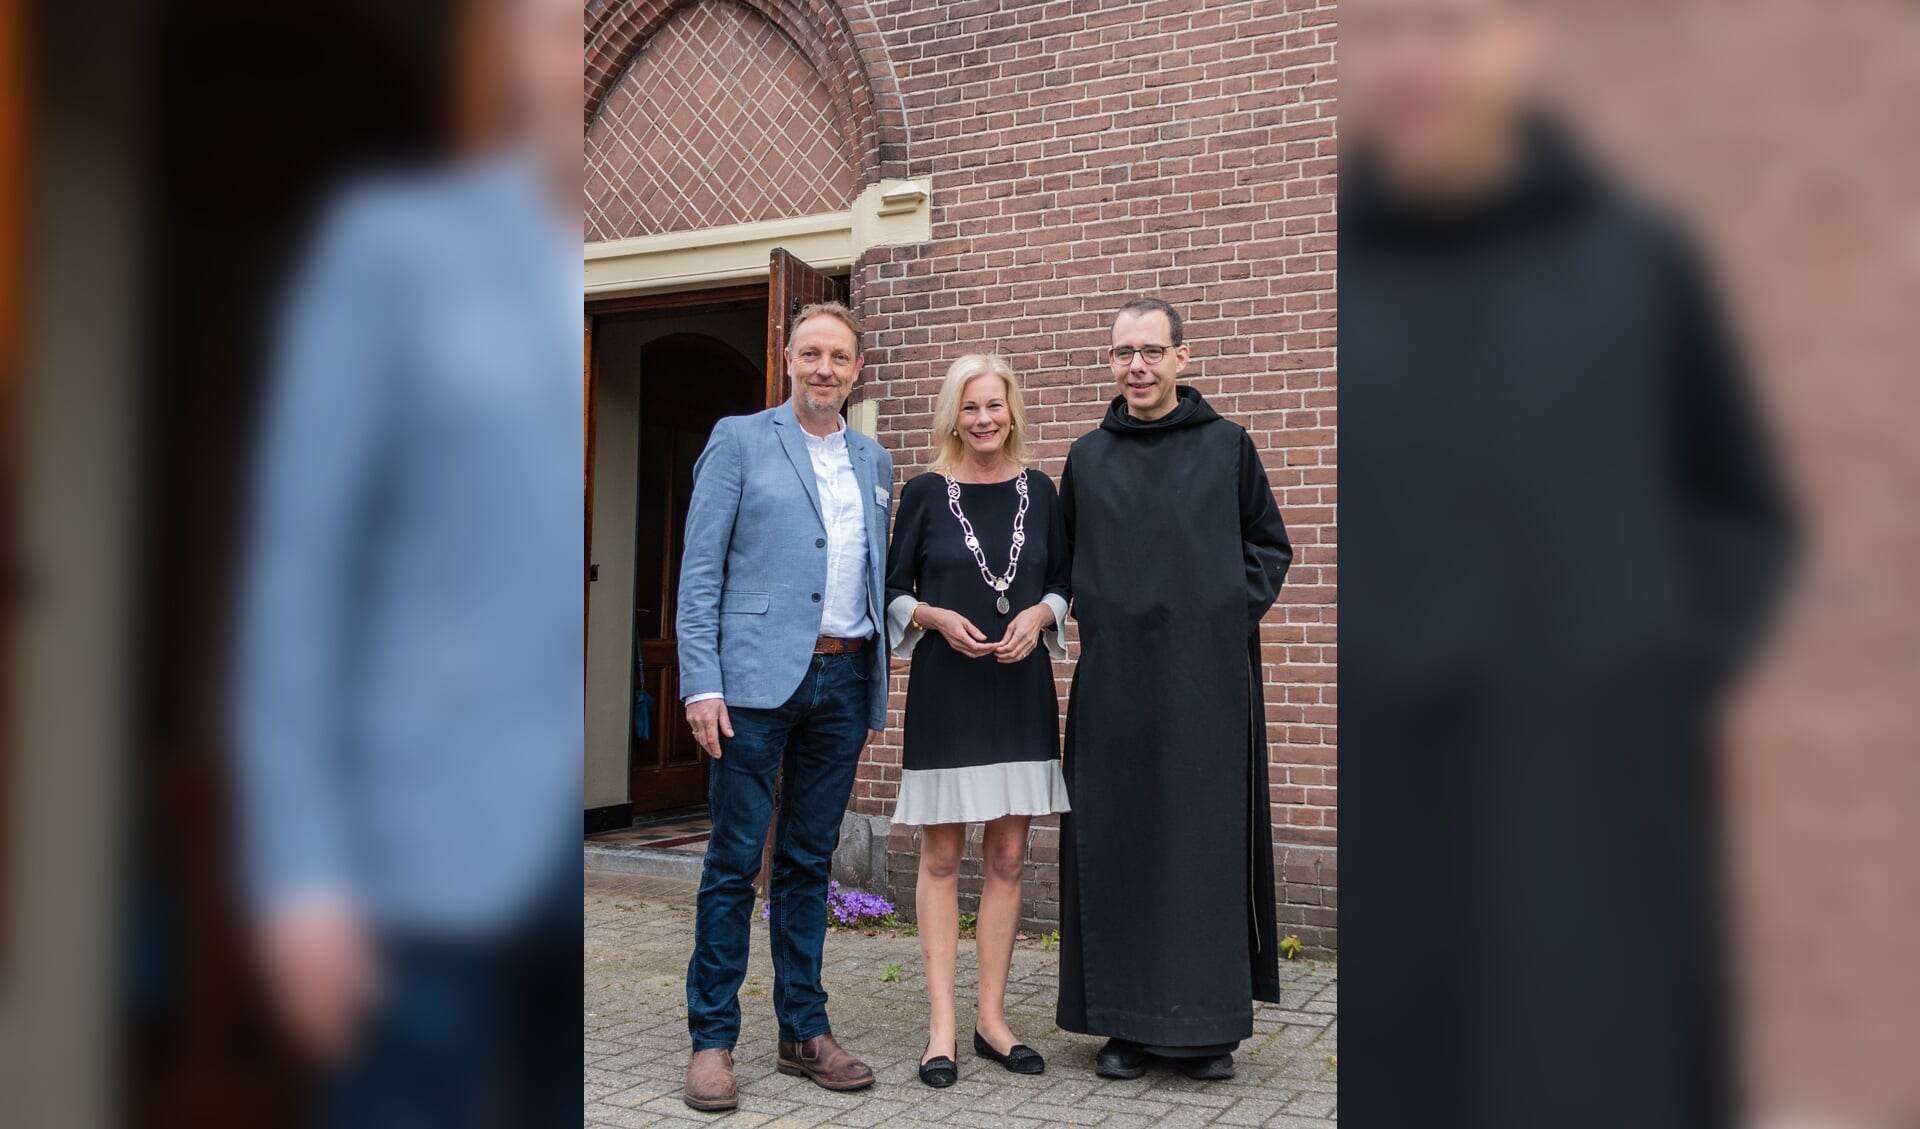 V.l.n.r.: Ds. Ronald Heins, burgemeester Annemieke Vermeulen, monnik en theoloog Thomas Quartier. Foto: Henk Derksen